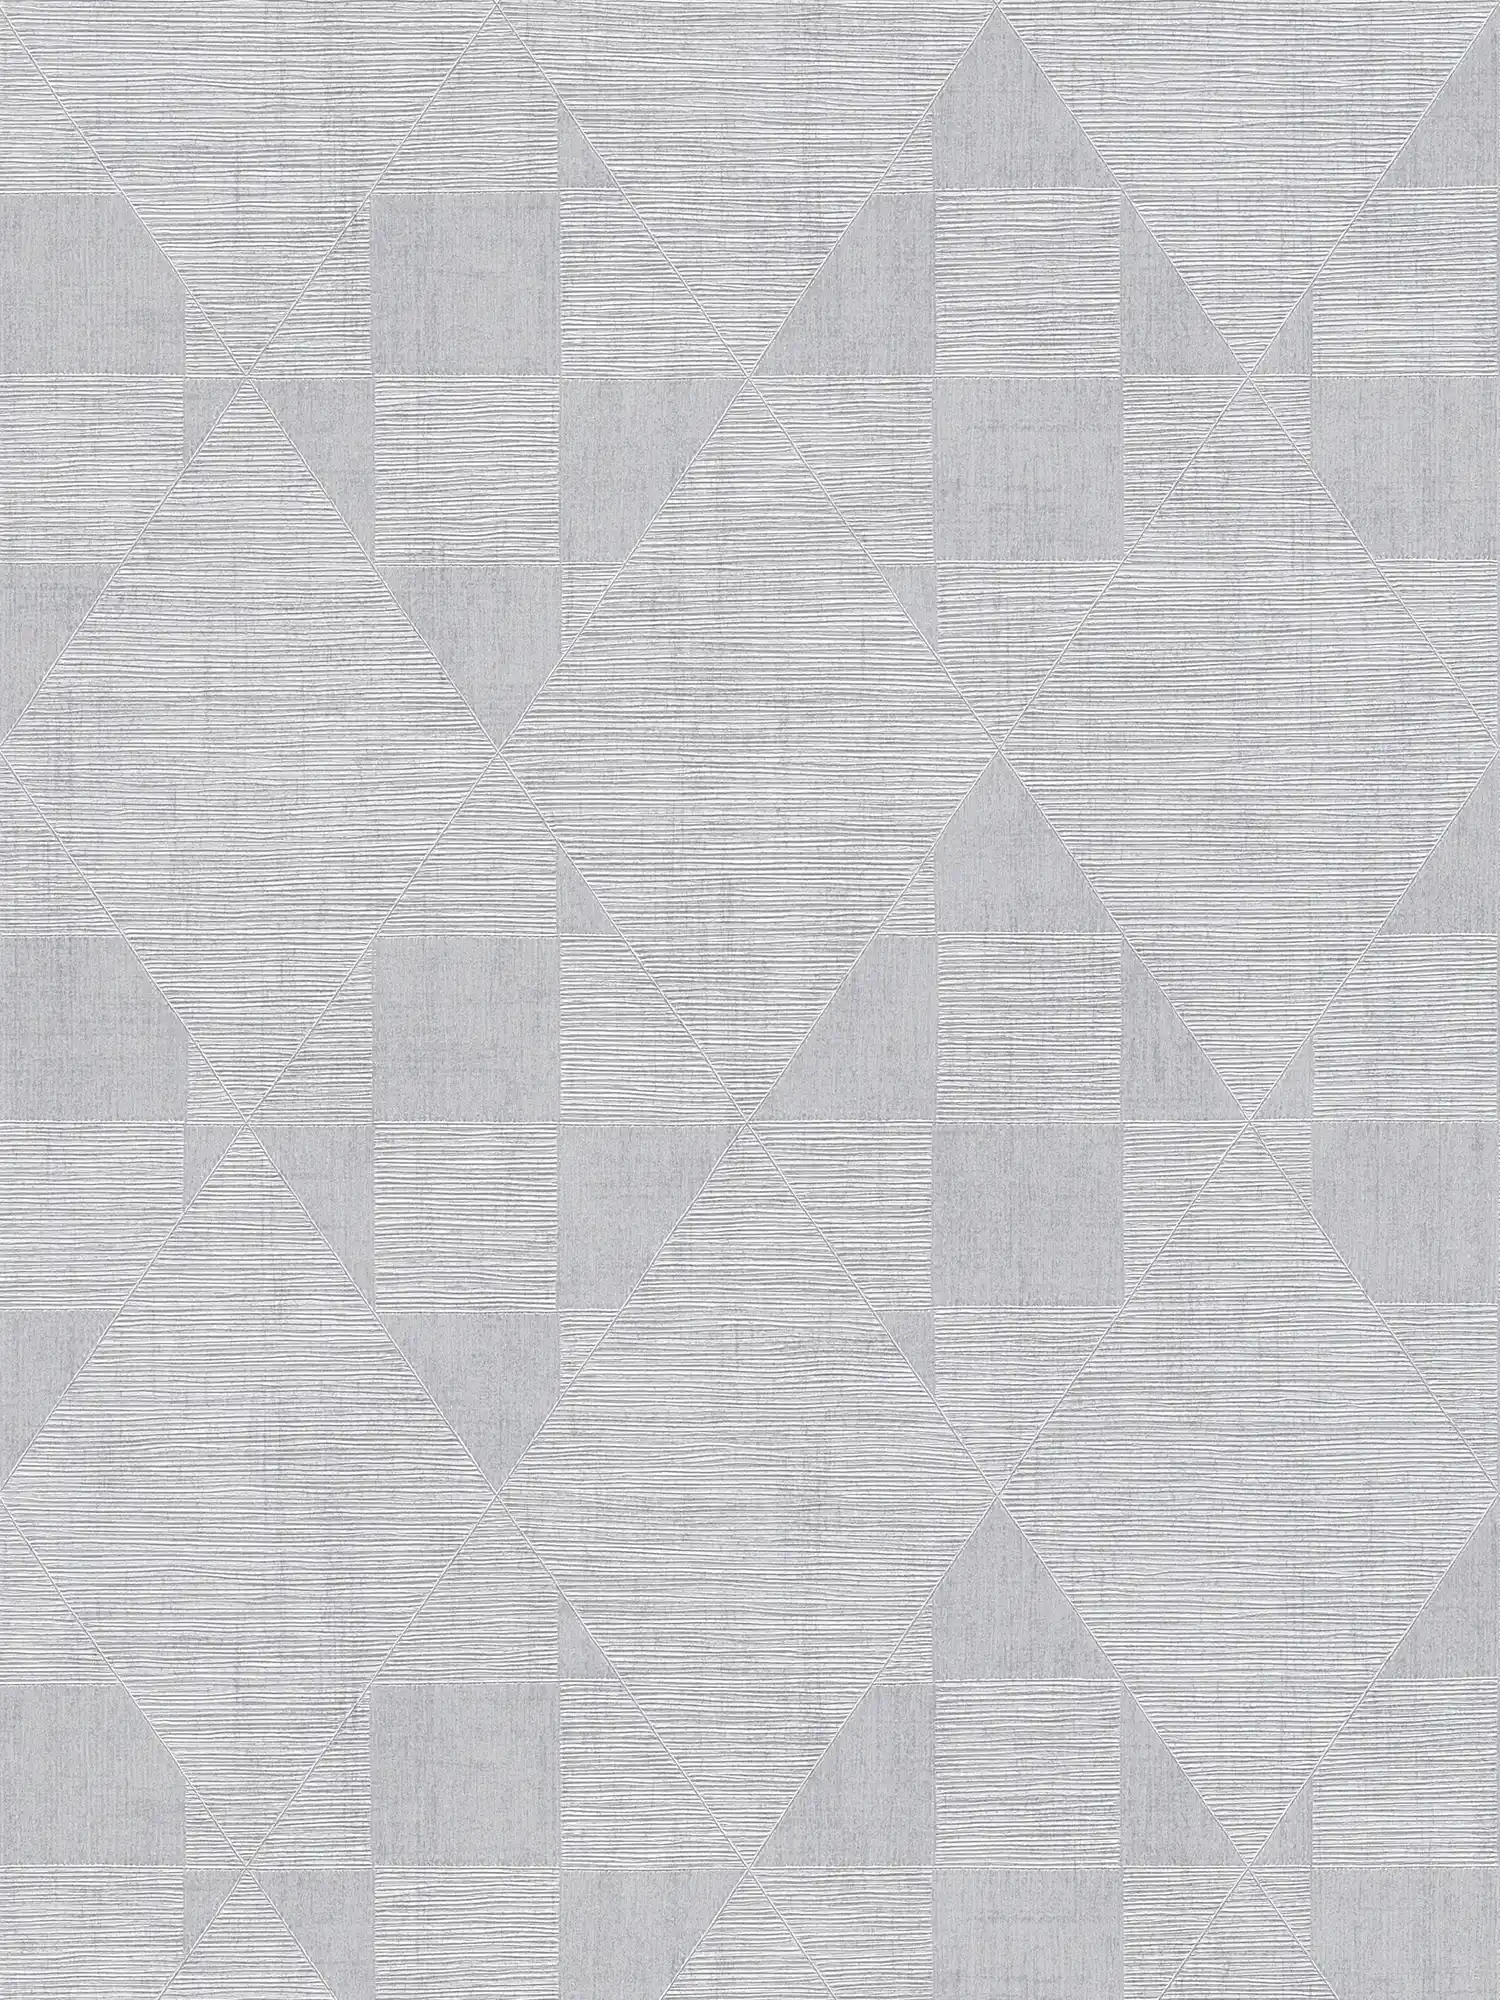             Melierte Tapete mit Retro Muster & Metallic Glanz – Grau
        